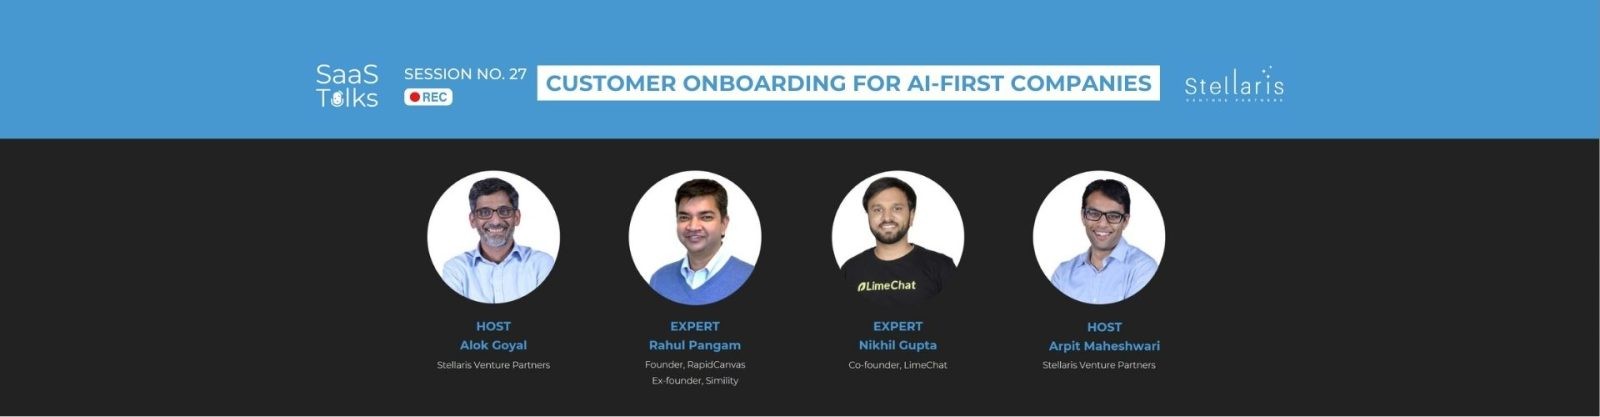 SaaS Talks #27: Customer Onboarding for AI-first Companies